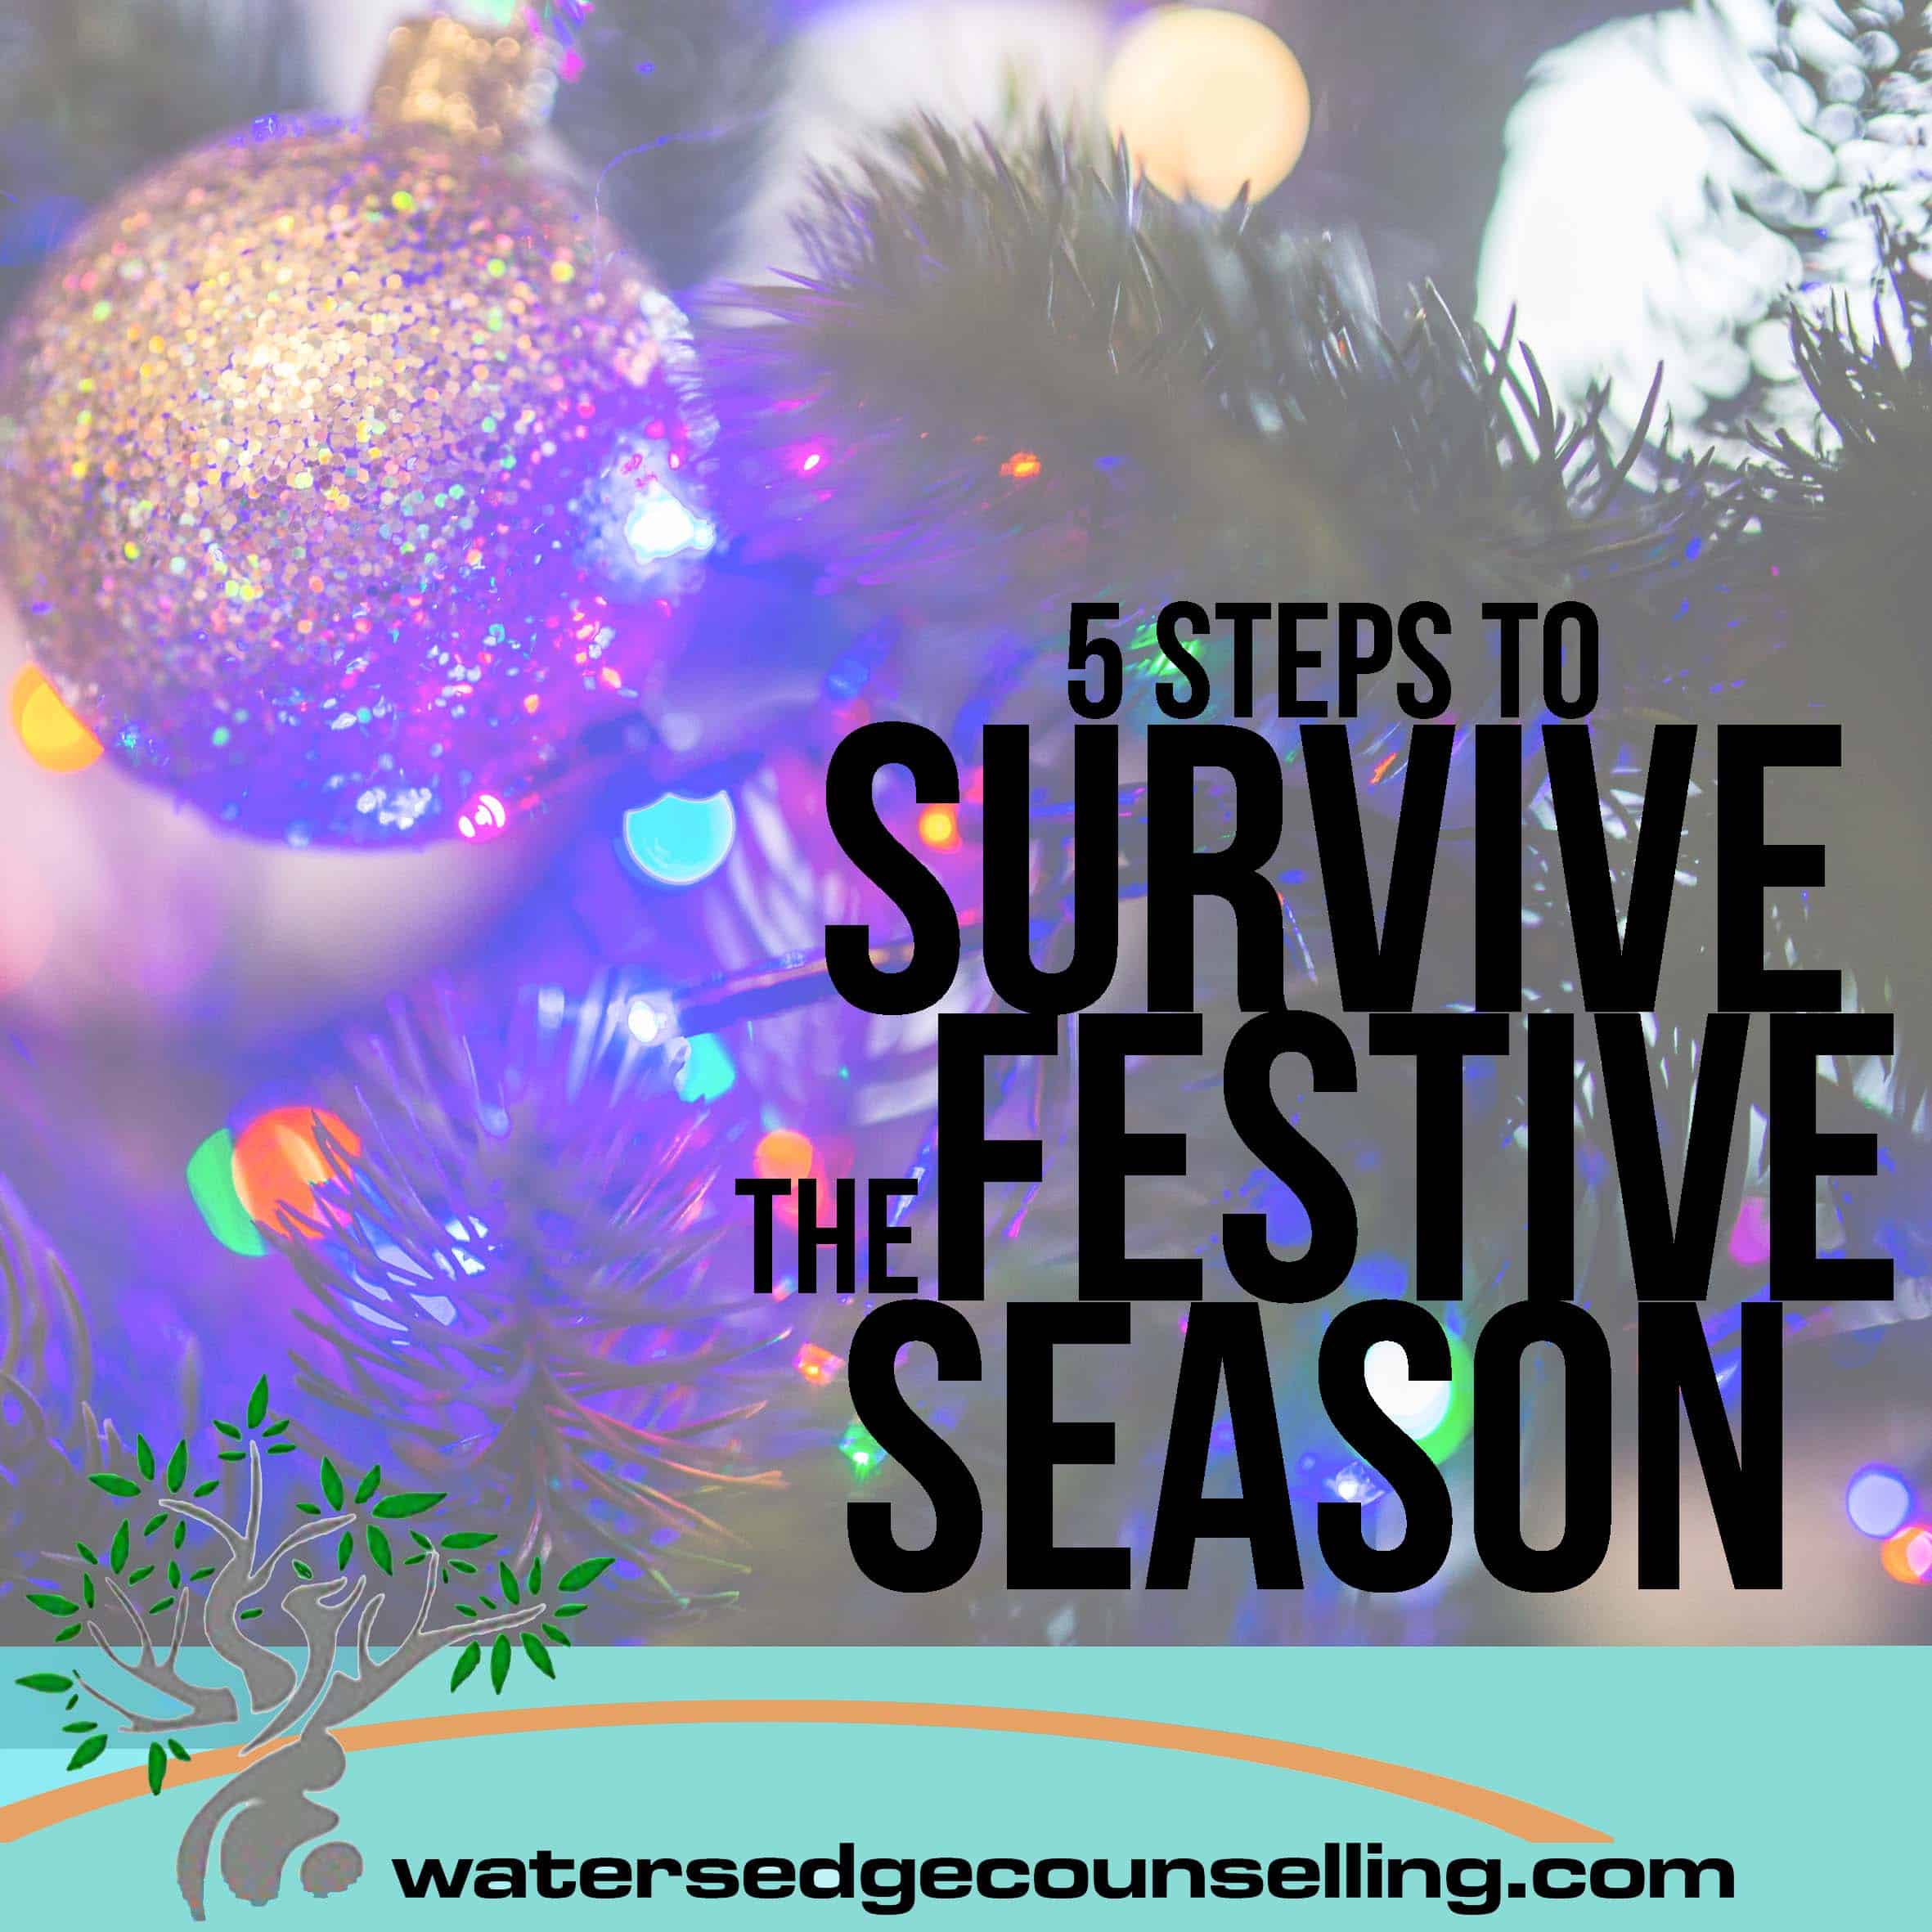 5 Steps to Survive the Festive Season